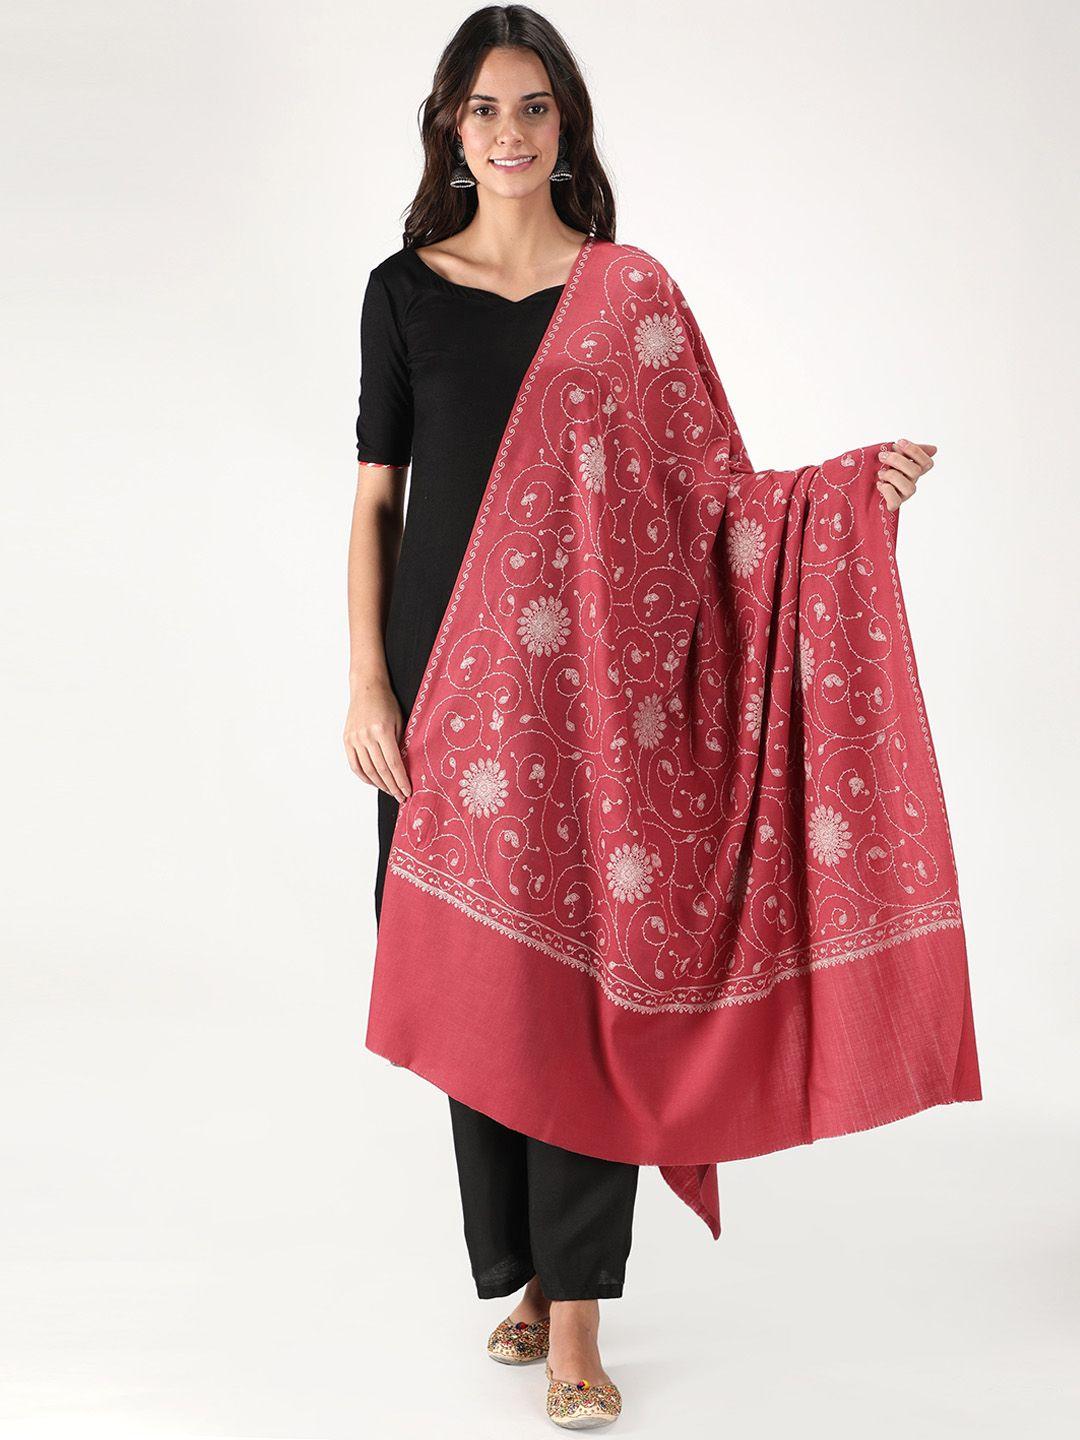 zamour women pink embroidered wool shawl